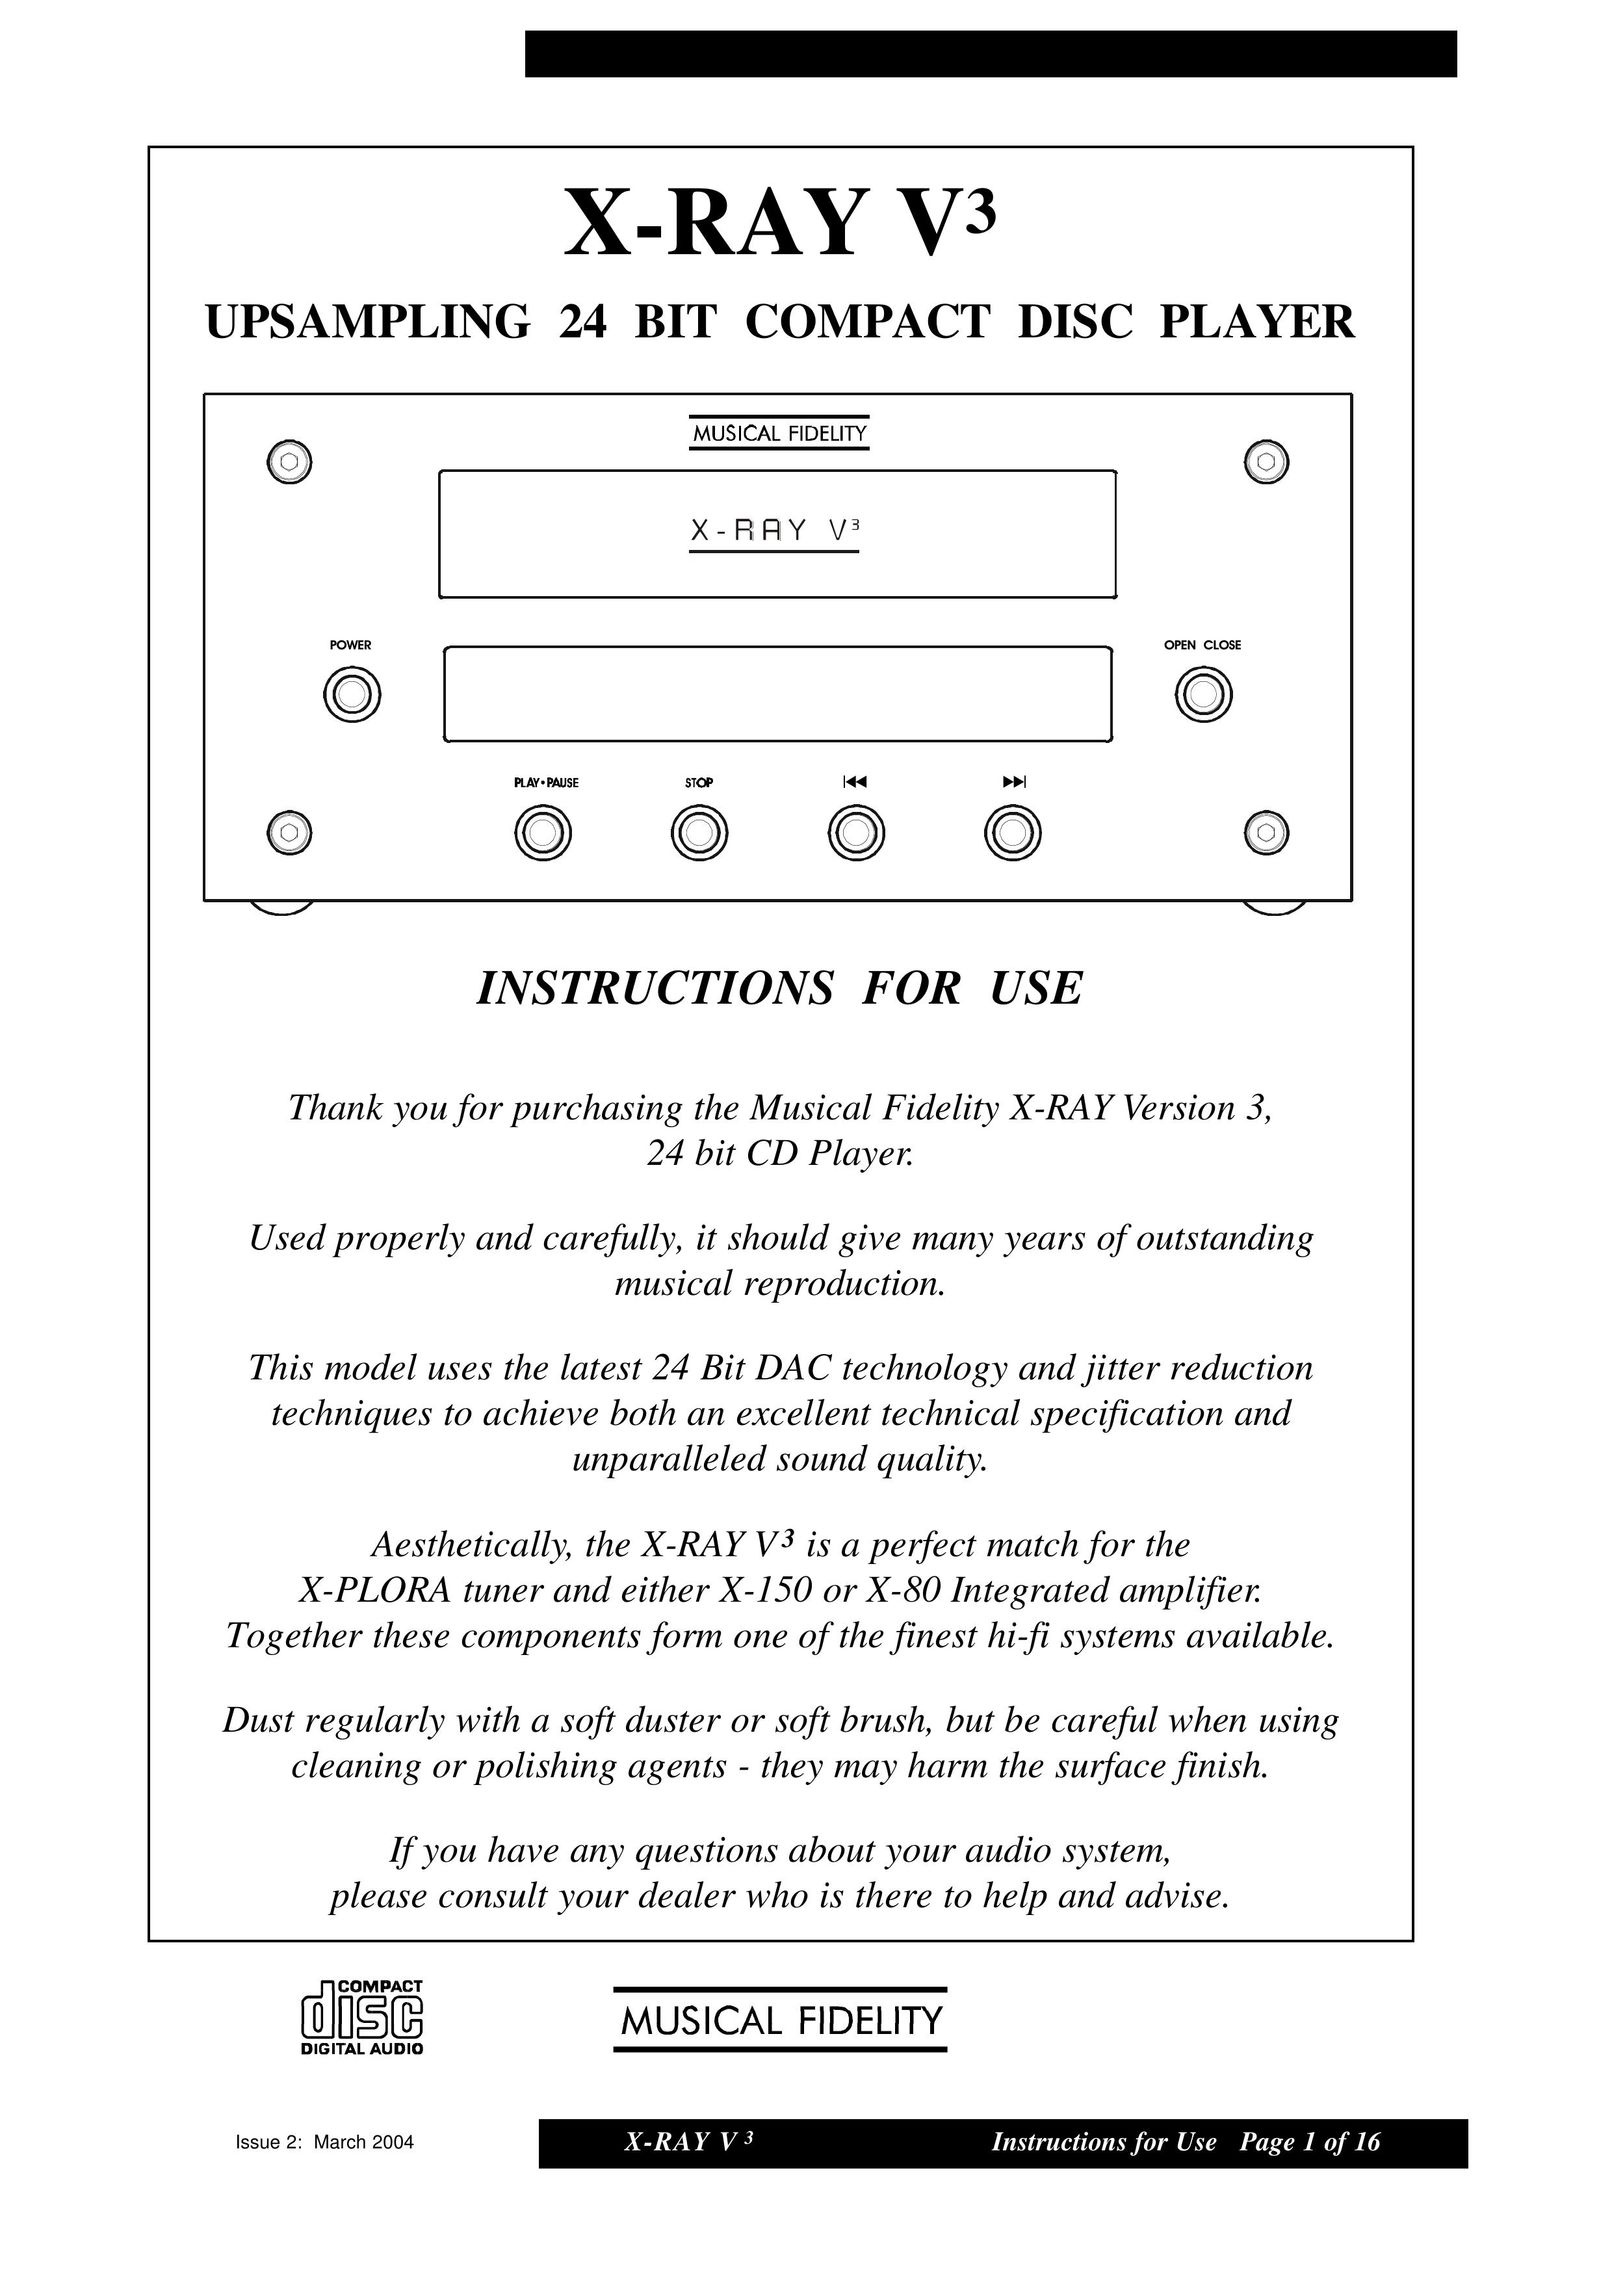 Musical Fidelity X-RAY V3 CD Player User Manual